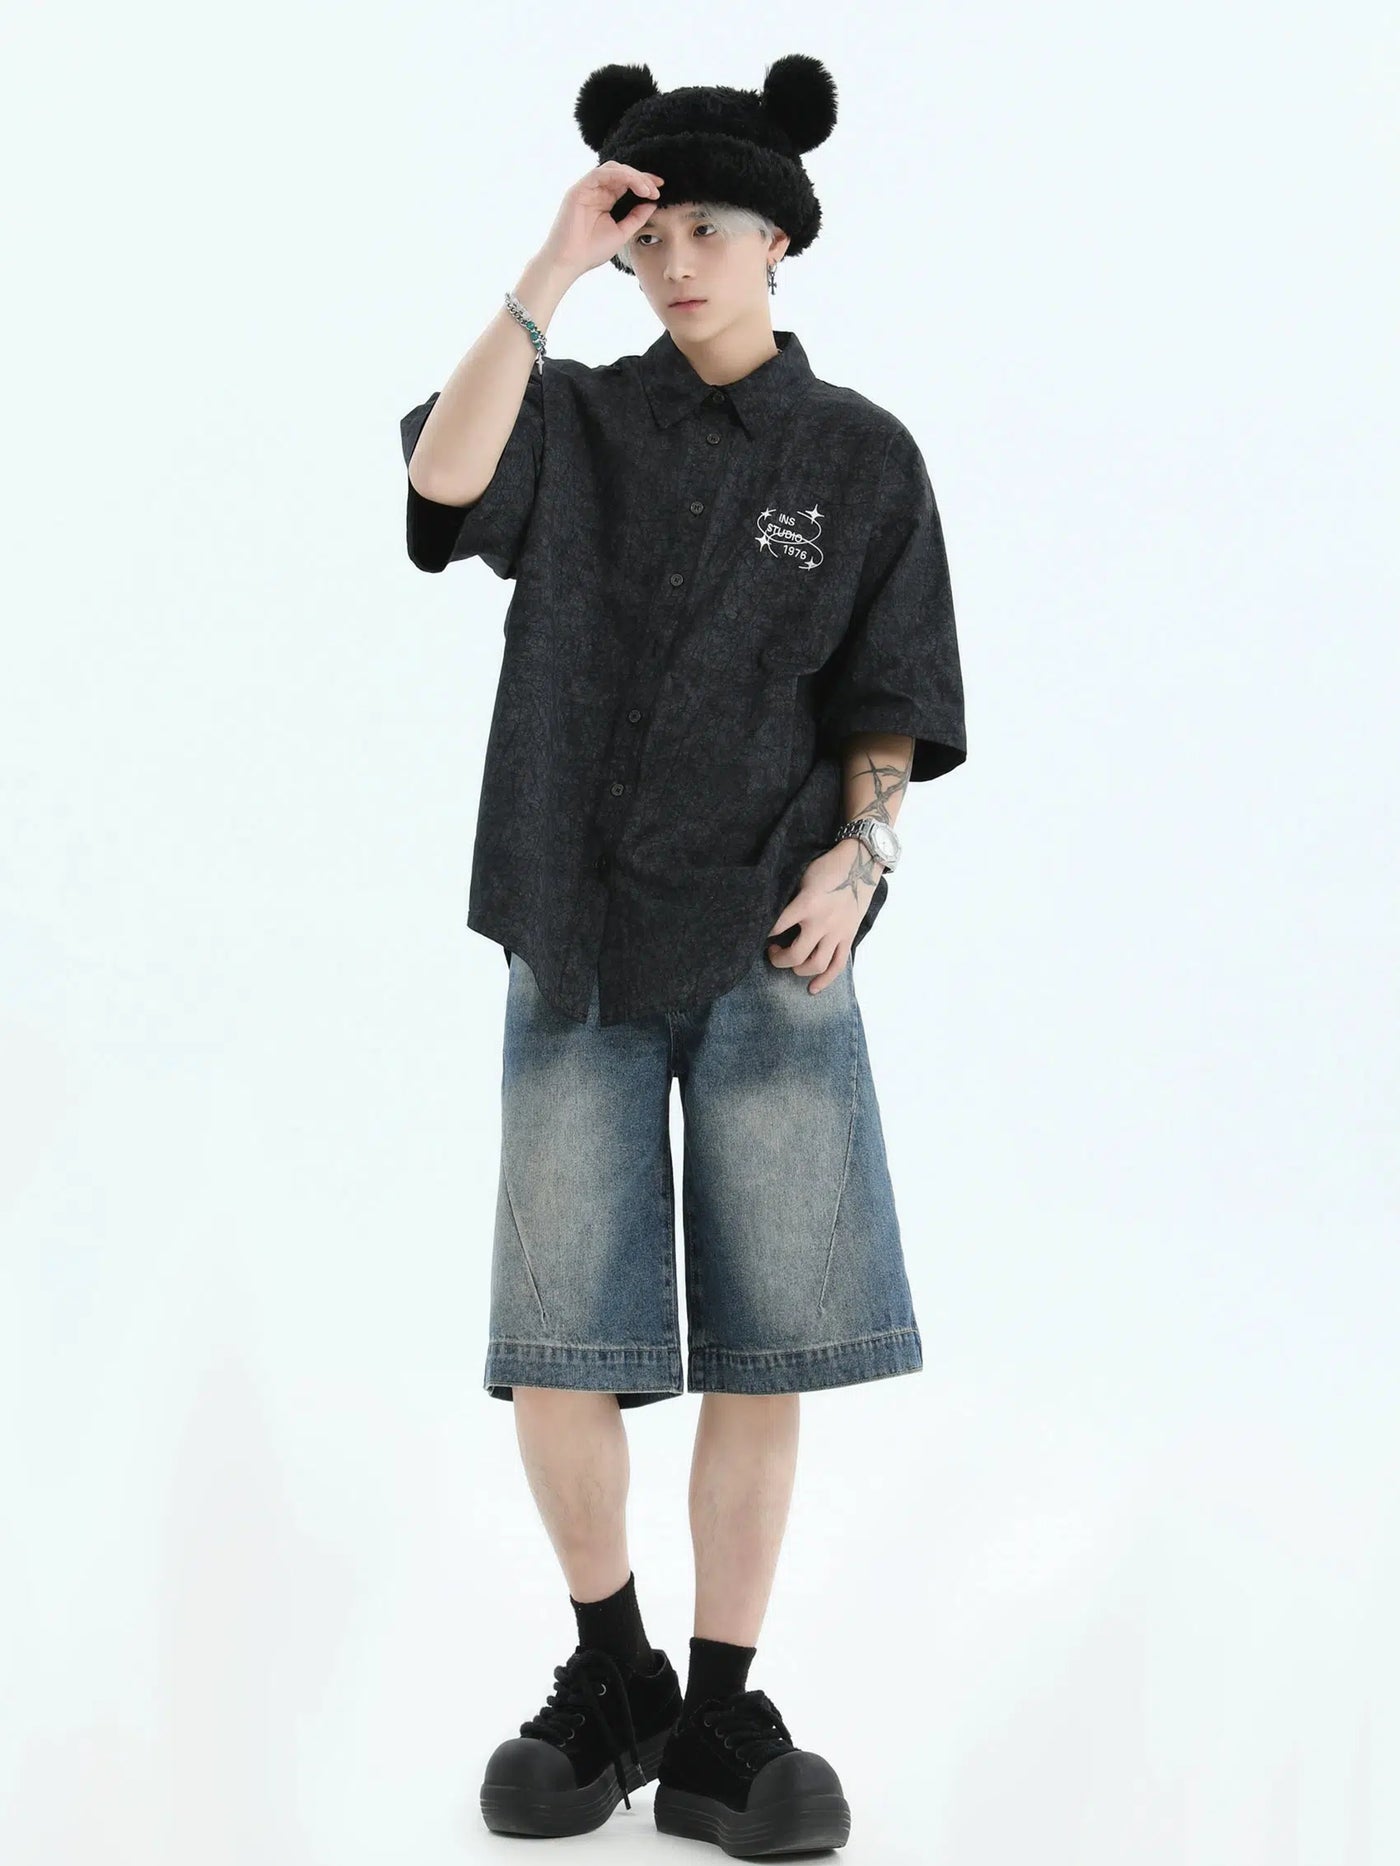 Faded Knee Denim Shorts Korean Street Fashion Shorts By INS Korea Shop Online at OH Vault